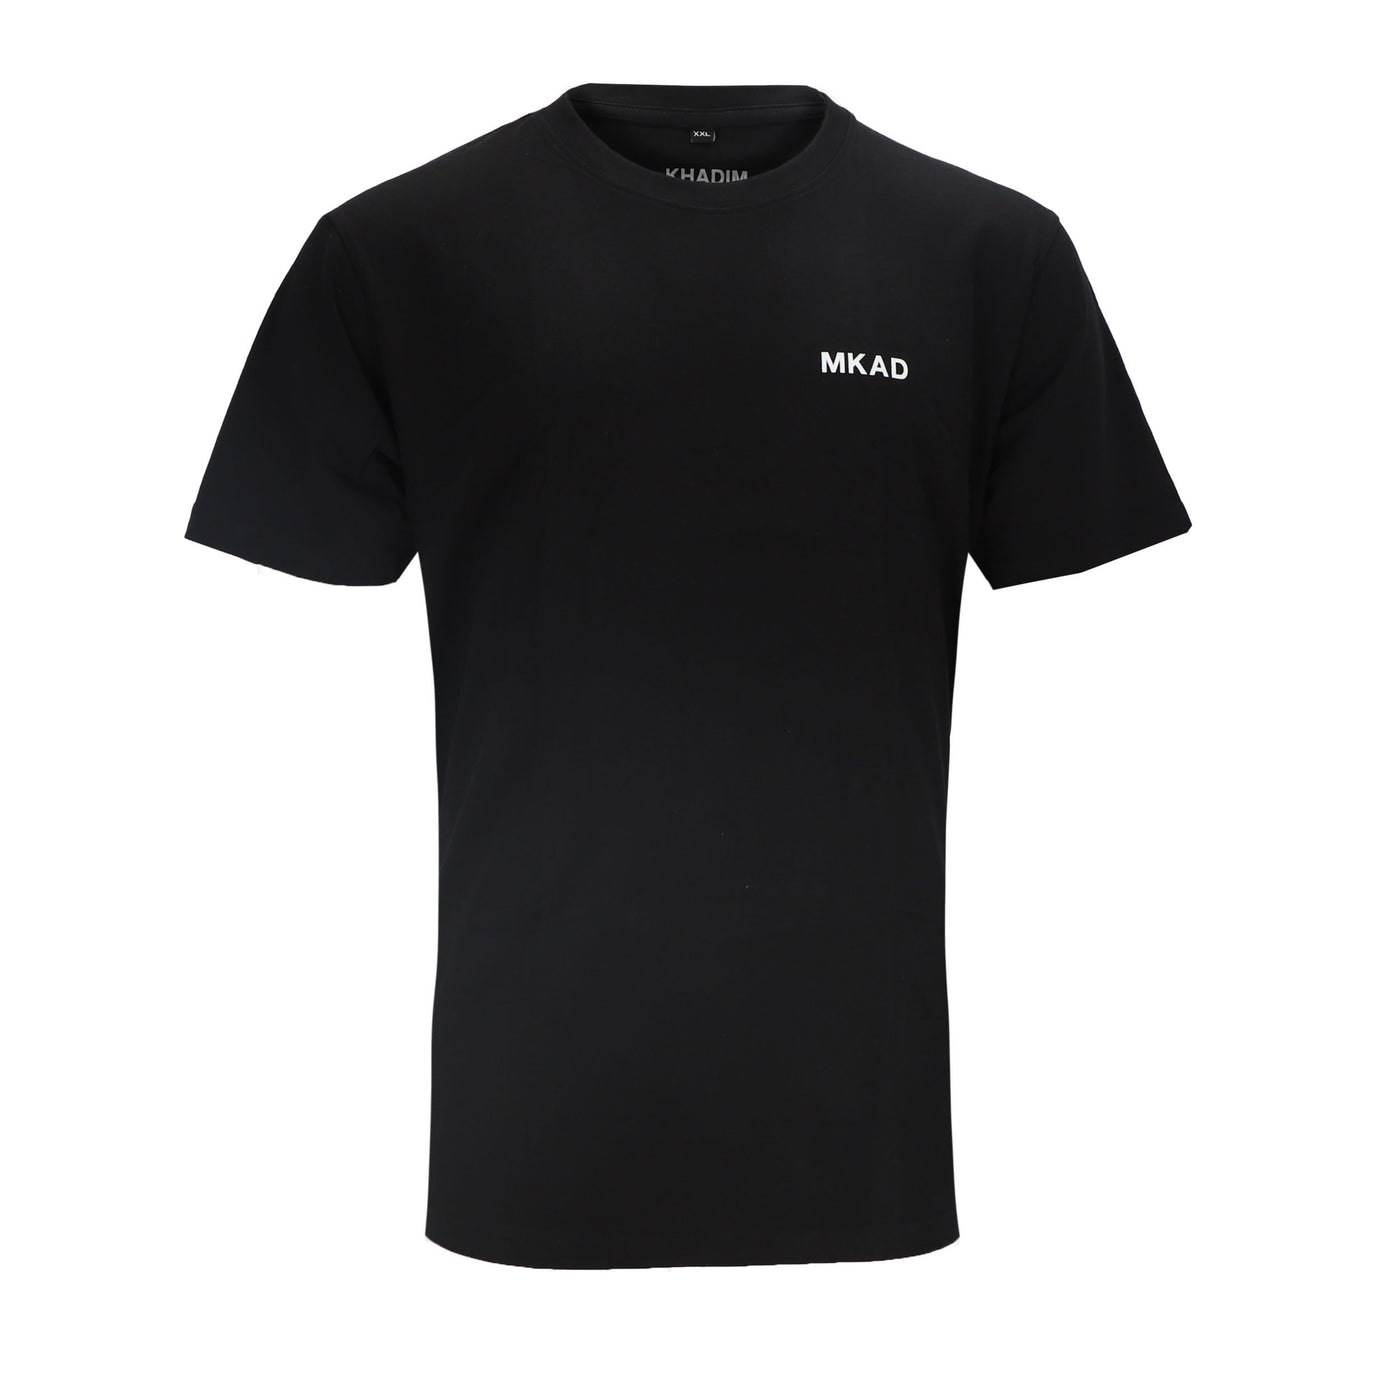 Basic T-Shirt schwarz